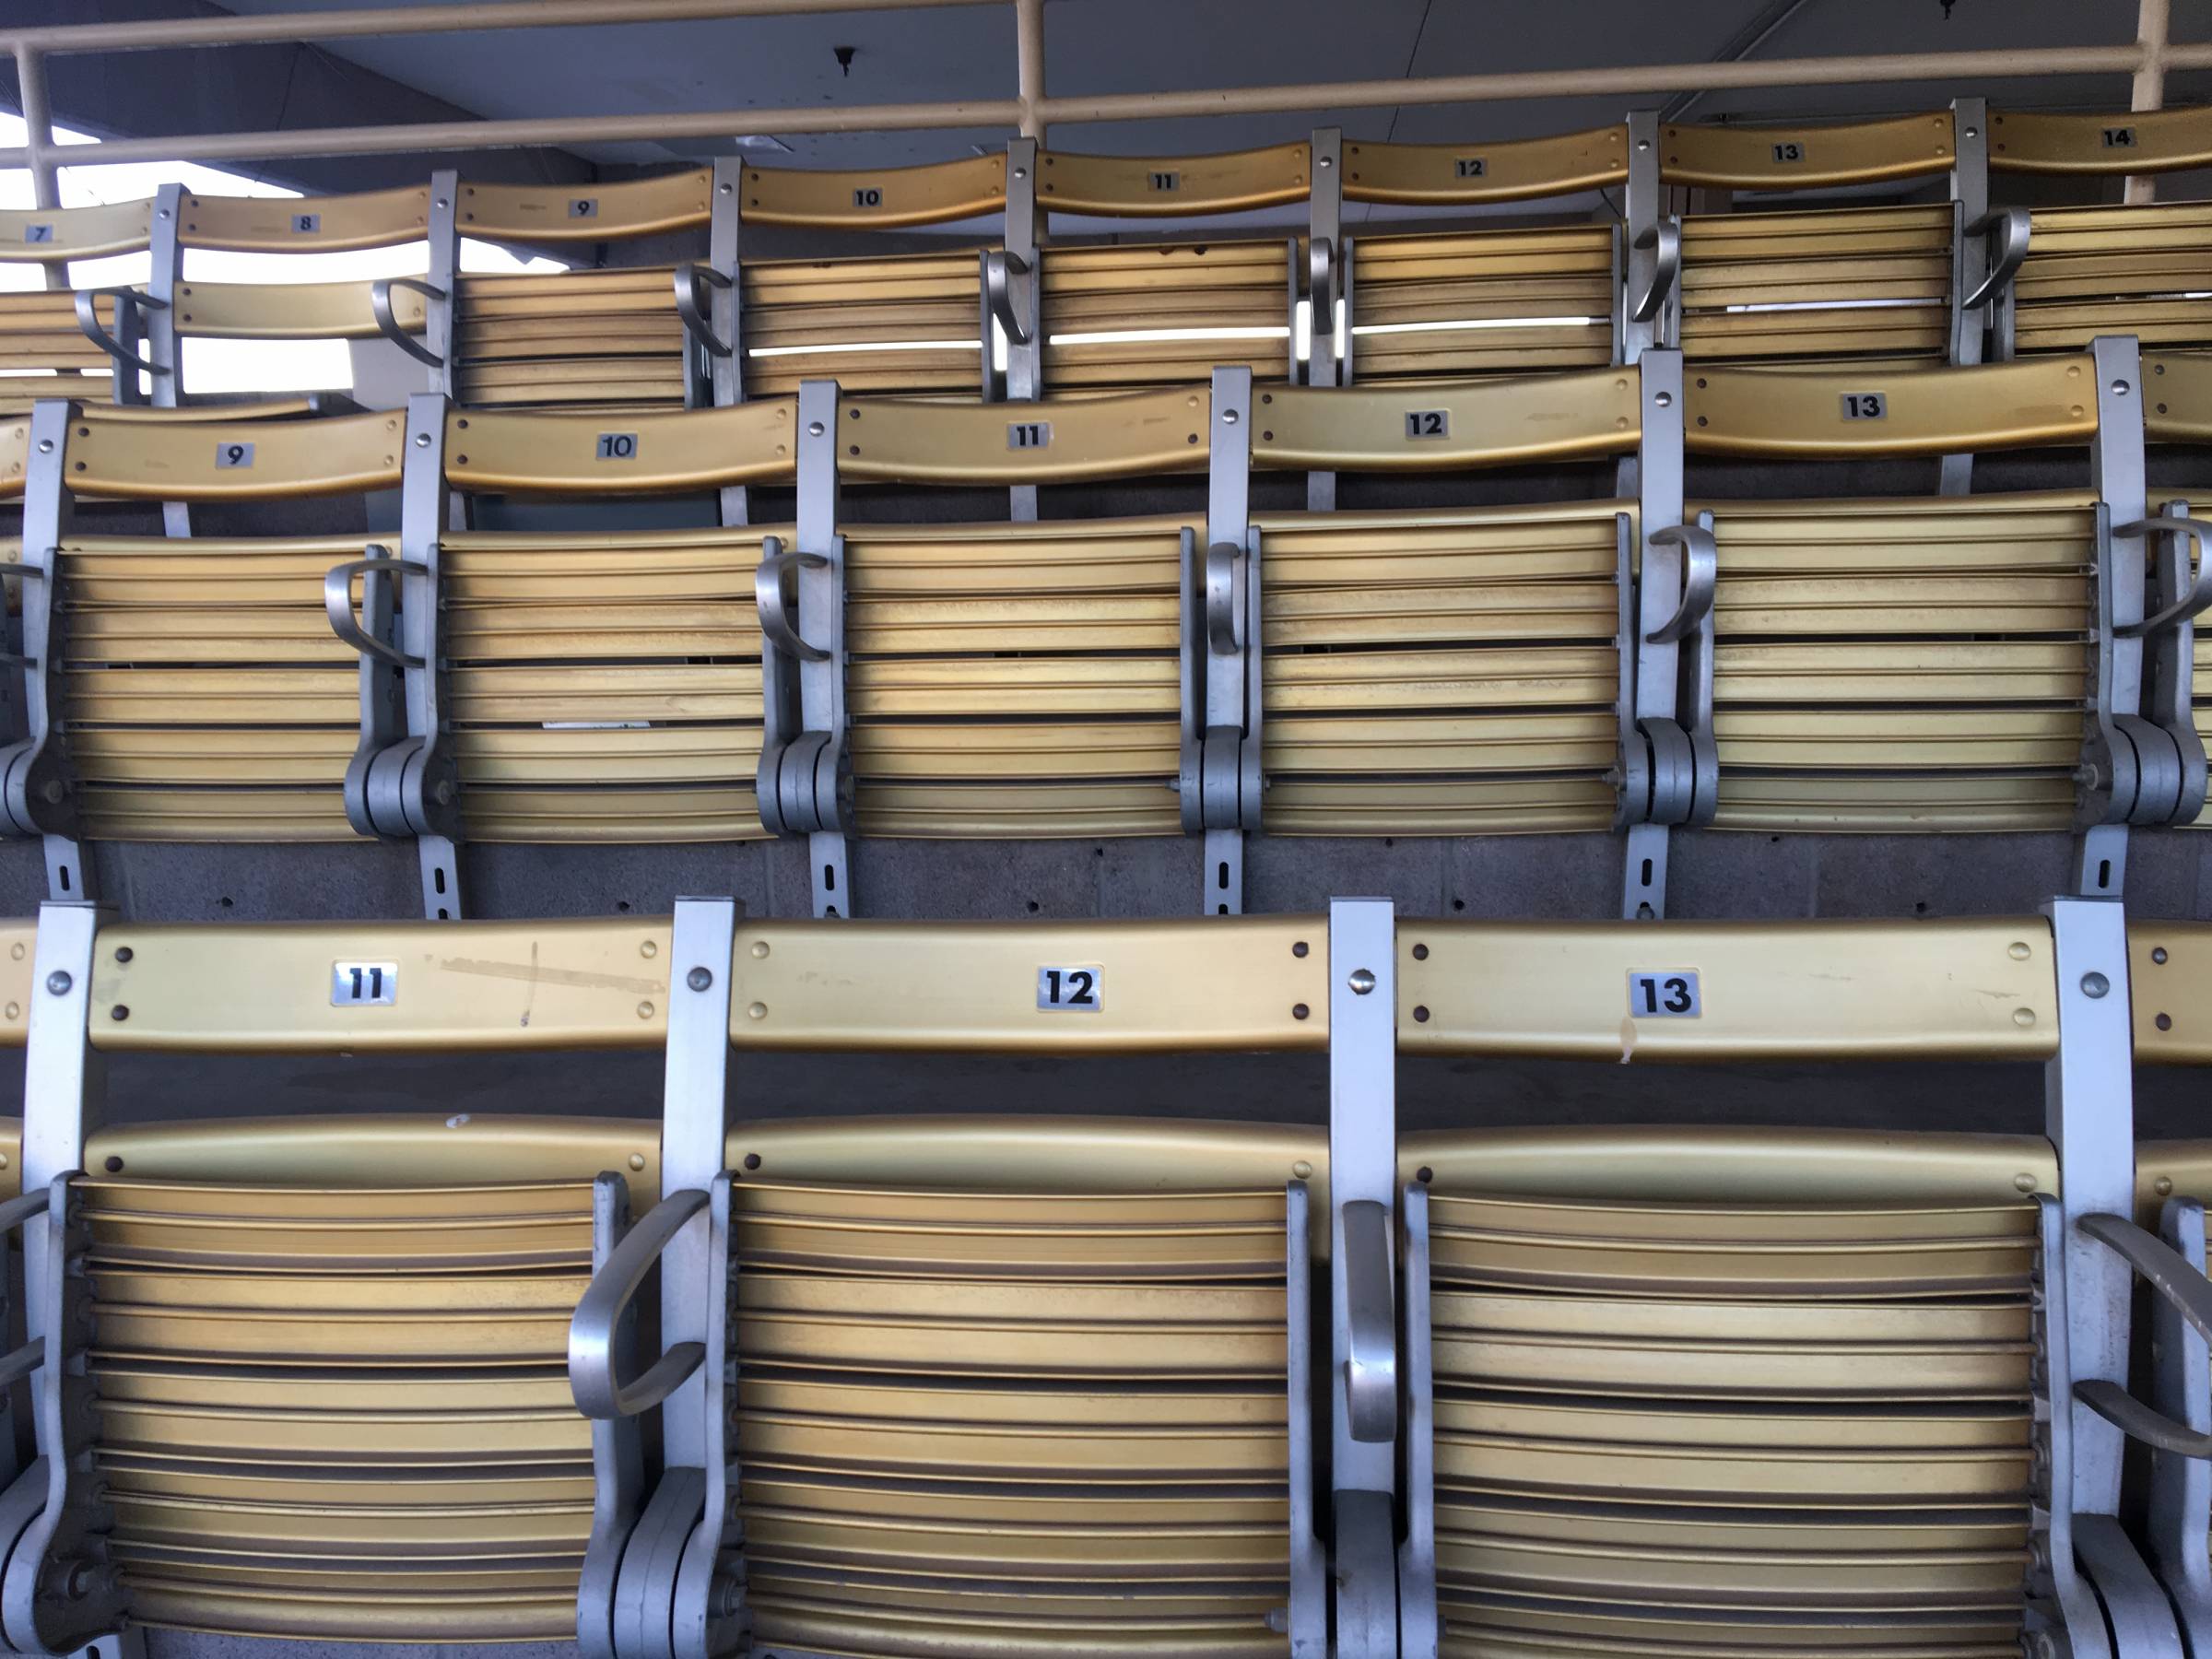 Asu Stadium Seating Chart 2018